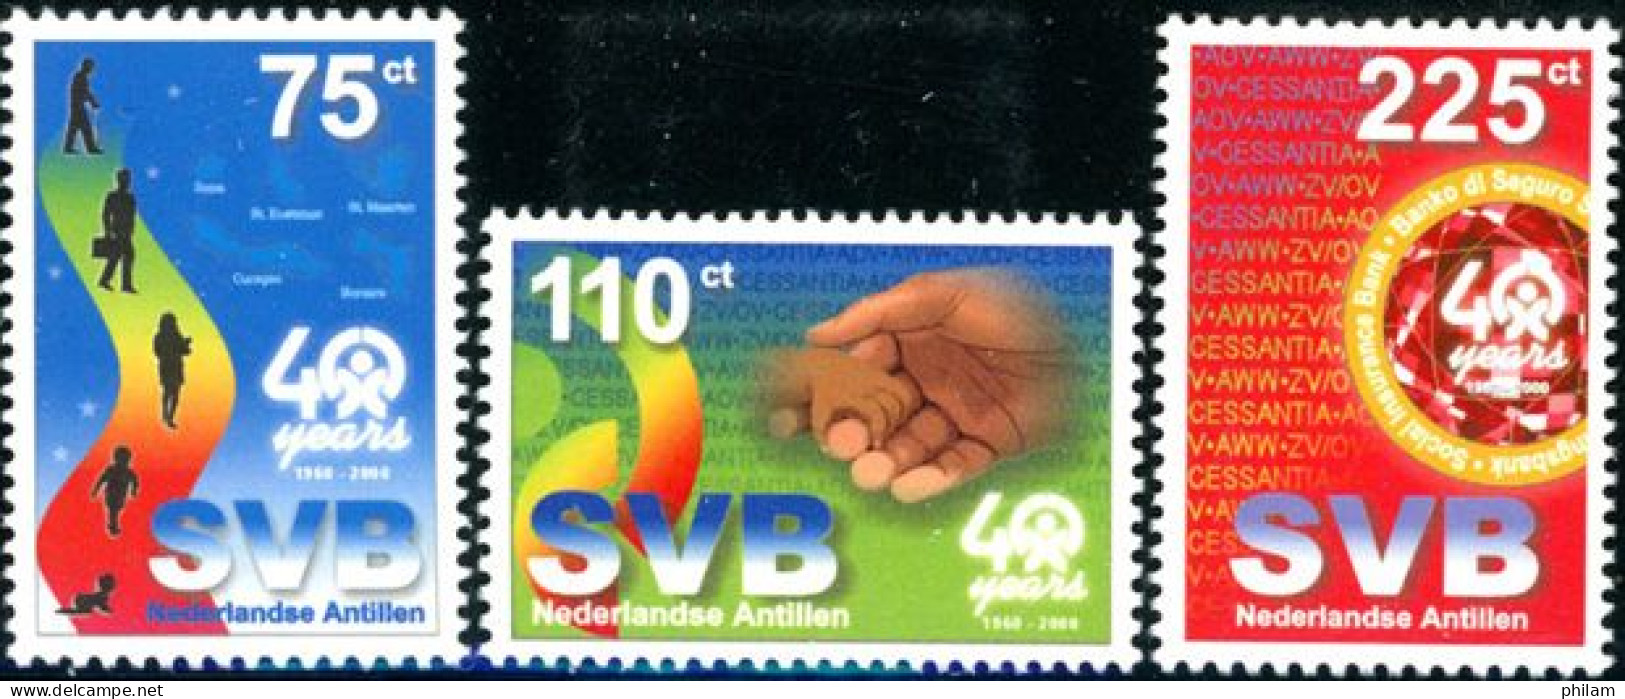 ANTILLES NEERLANDAISES 2000 - SVB Banque Des Antilles - 3 V. - Niederländische Antillen, Curaçao, Aruba